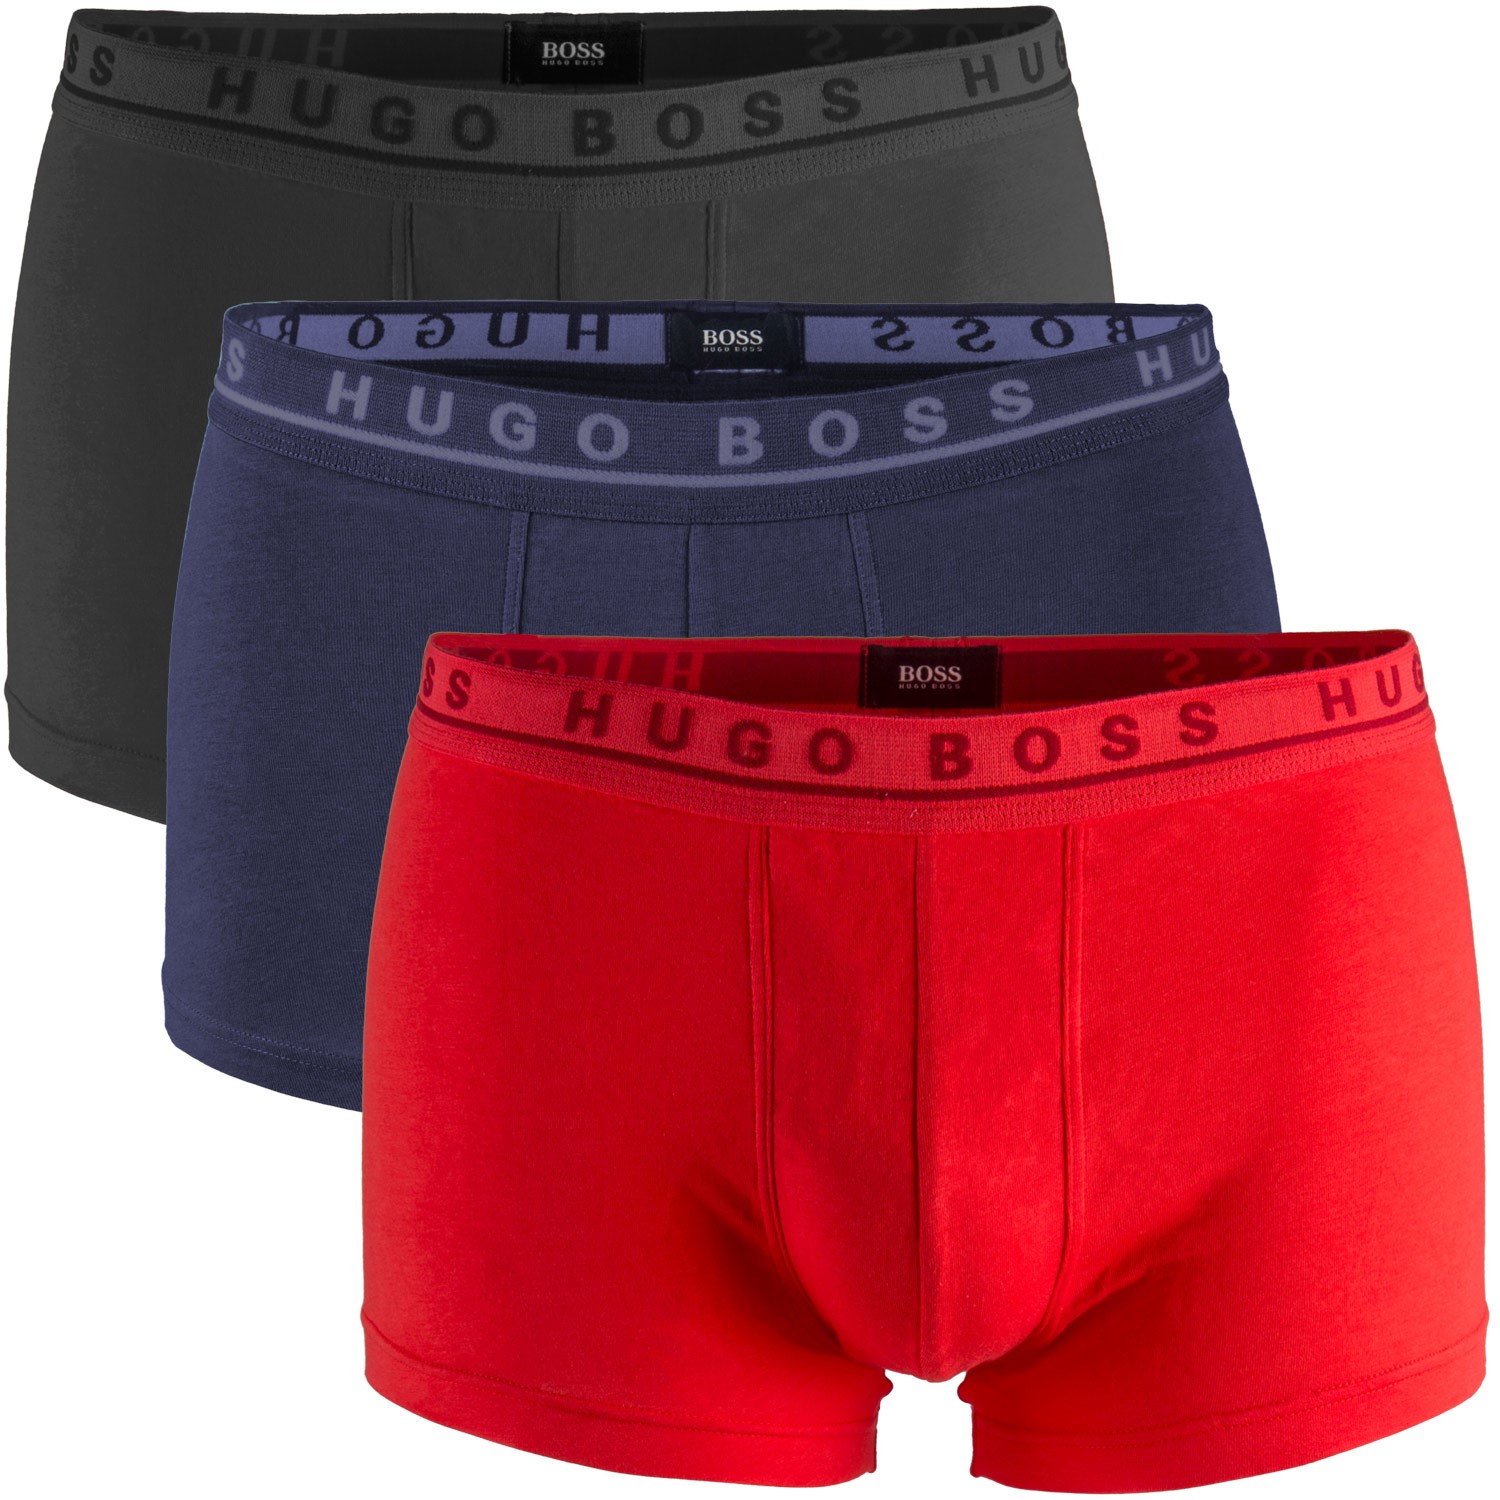 3-Pack Hugo Boss Cotton Stretch Boxer Shorts - Boxer - Trunks ...